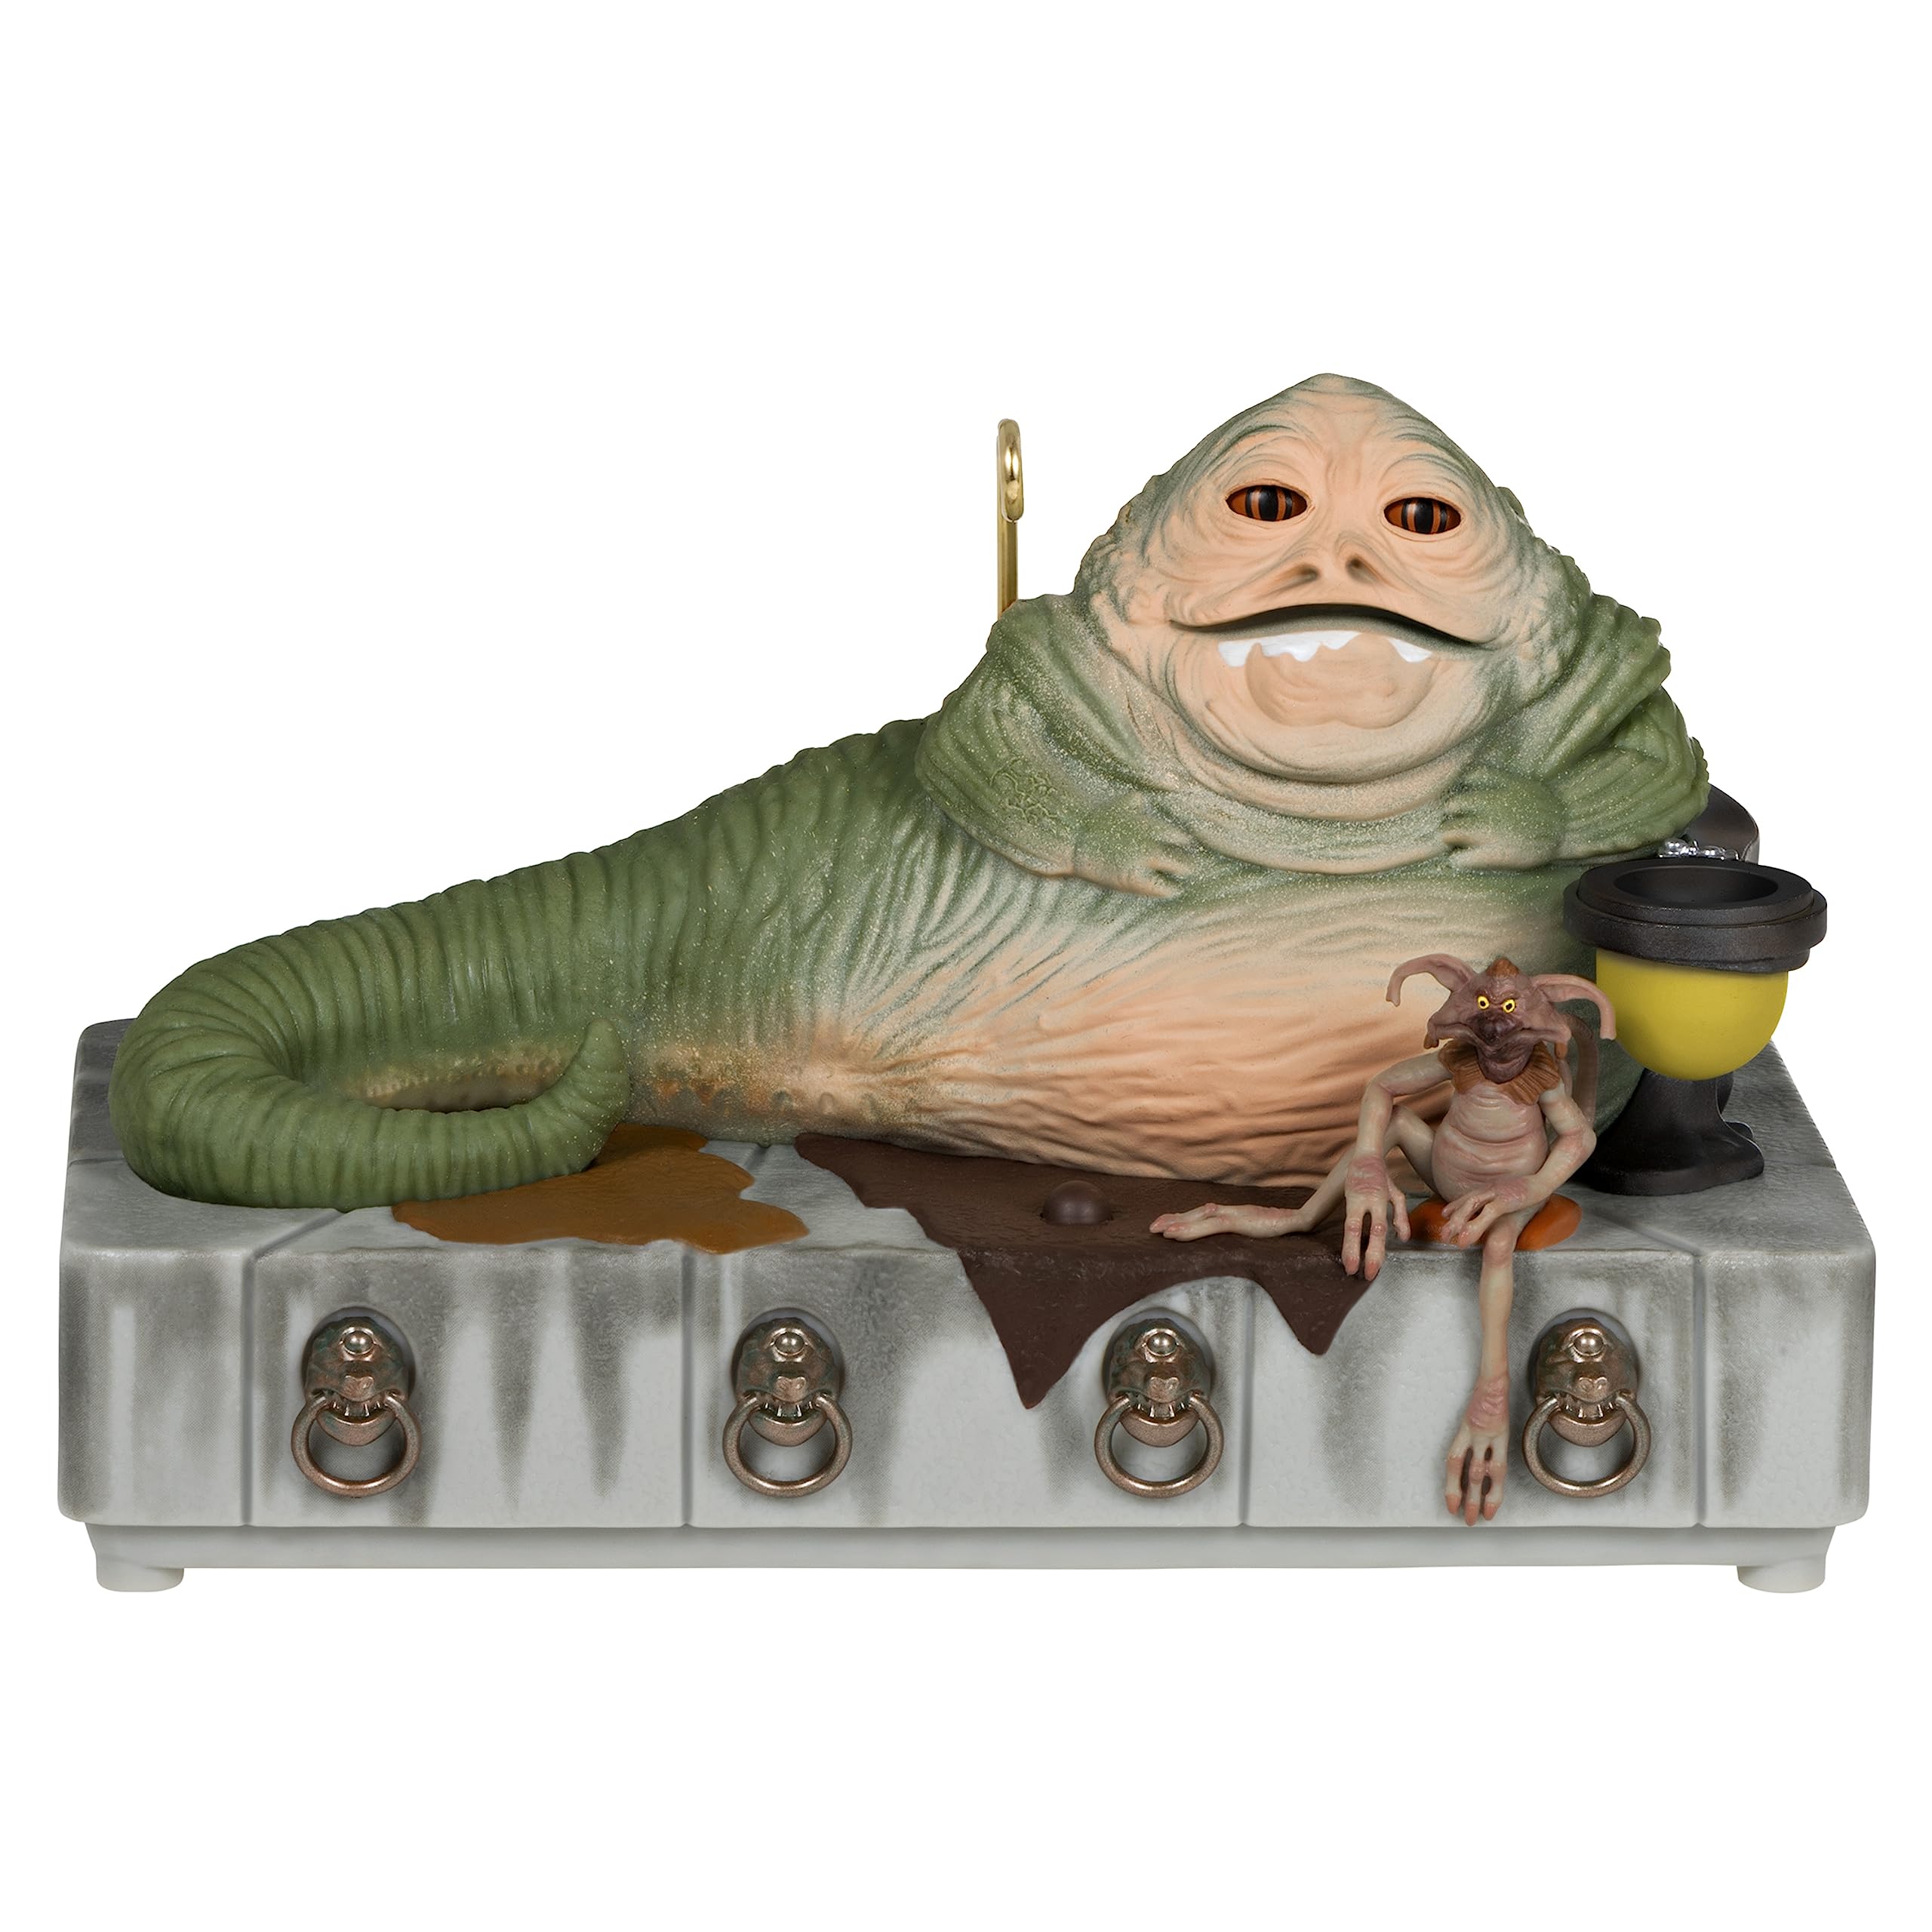 5" Hallmark Keepsake Christmas Ornament 2023: Star Wars Return of The Jedi Animatronic Jabba The Hutt $32 + Free Shipping w/ Prime or on $35+